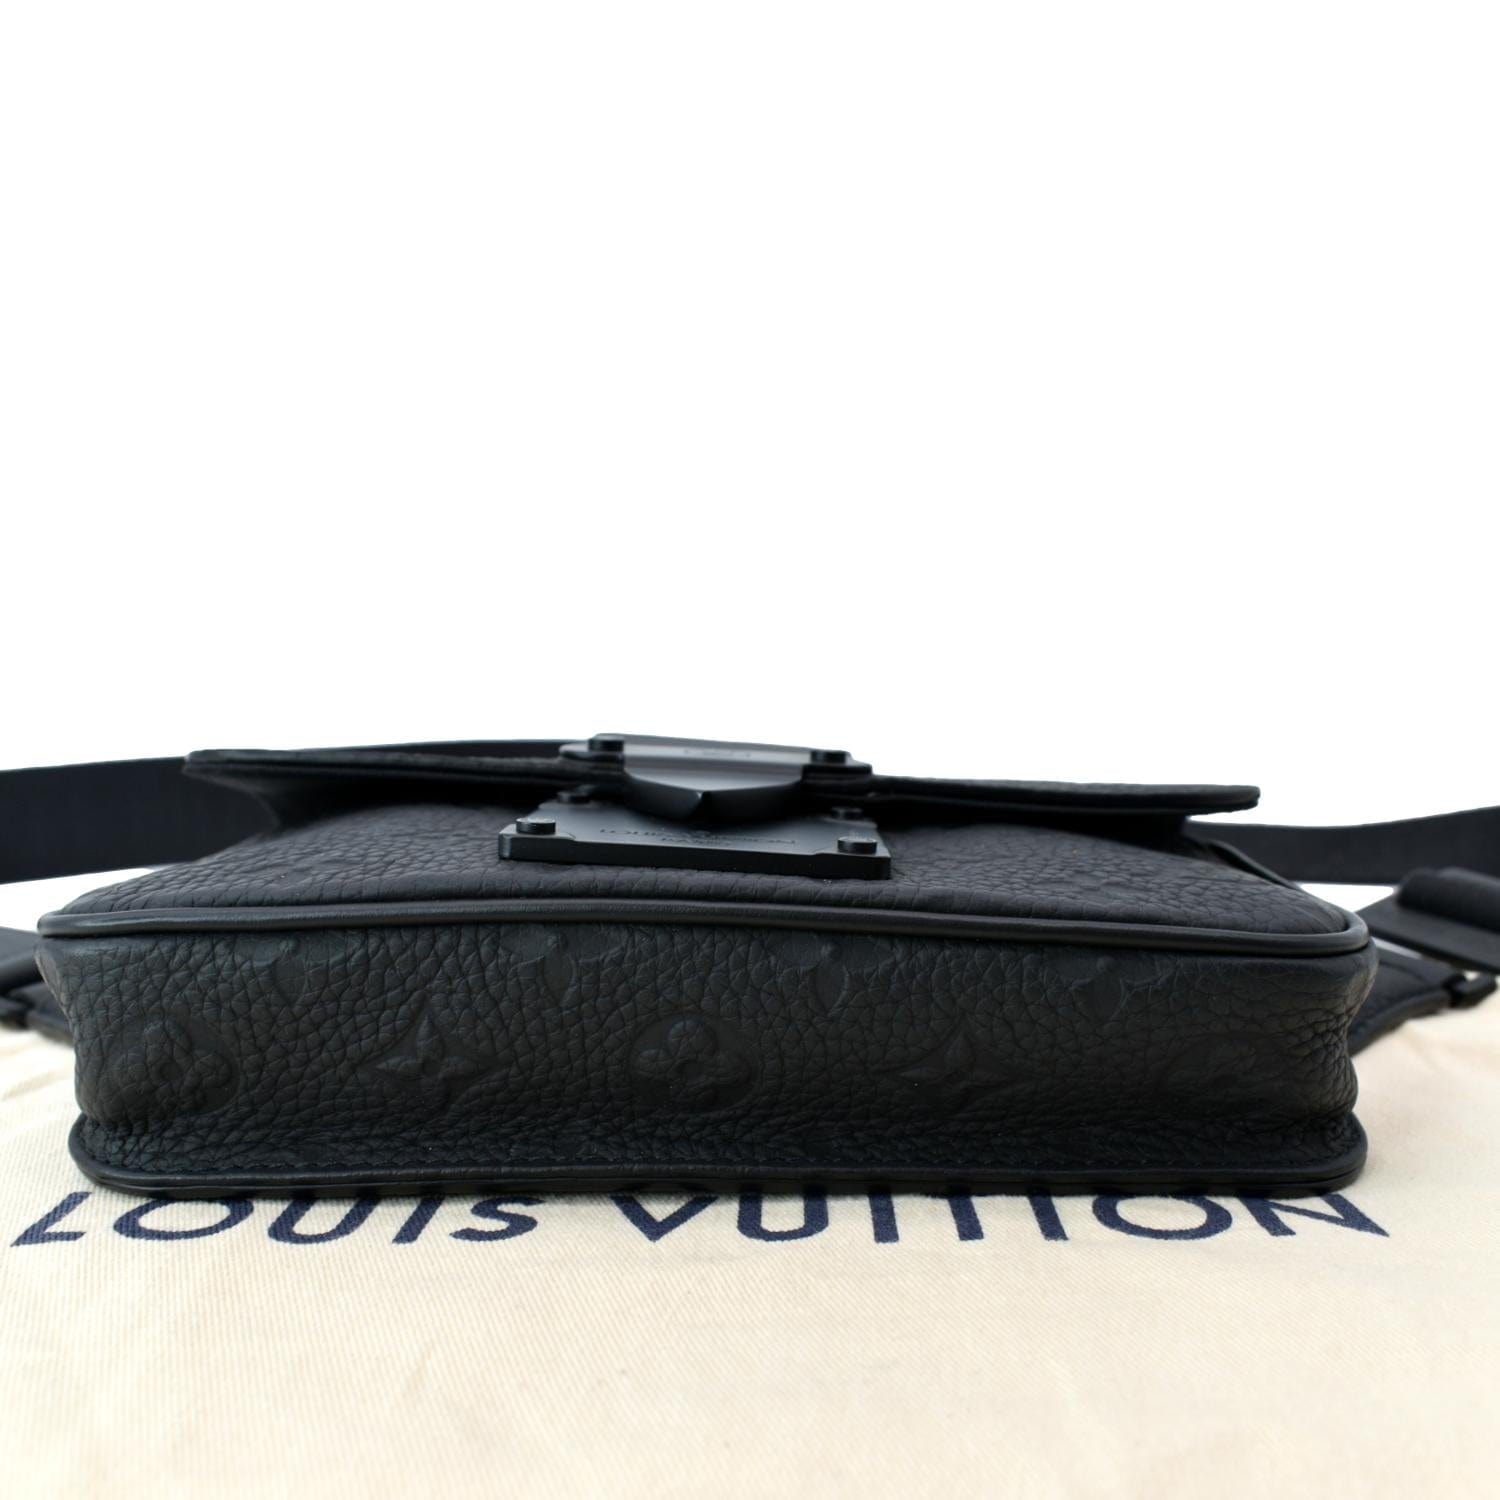 LOUIS VUITTON S-Lock Sling Monogram Leather Shoulder Bag Black